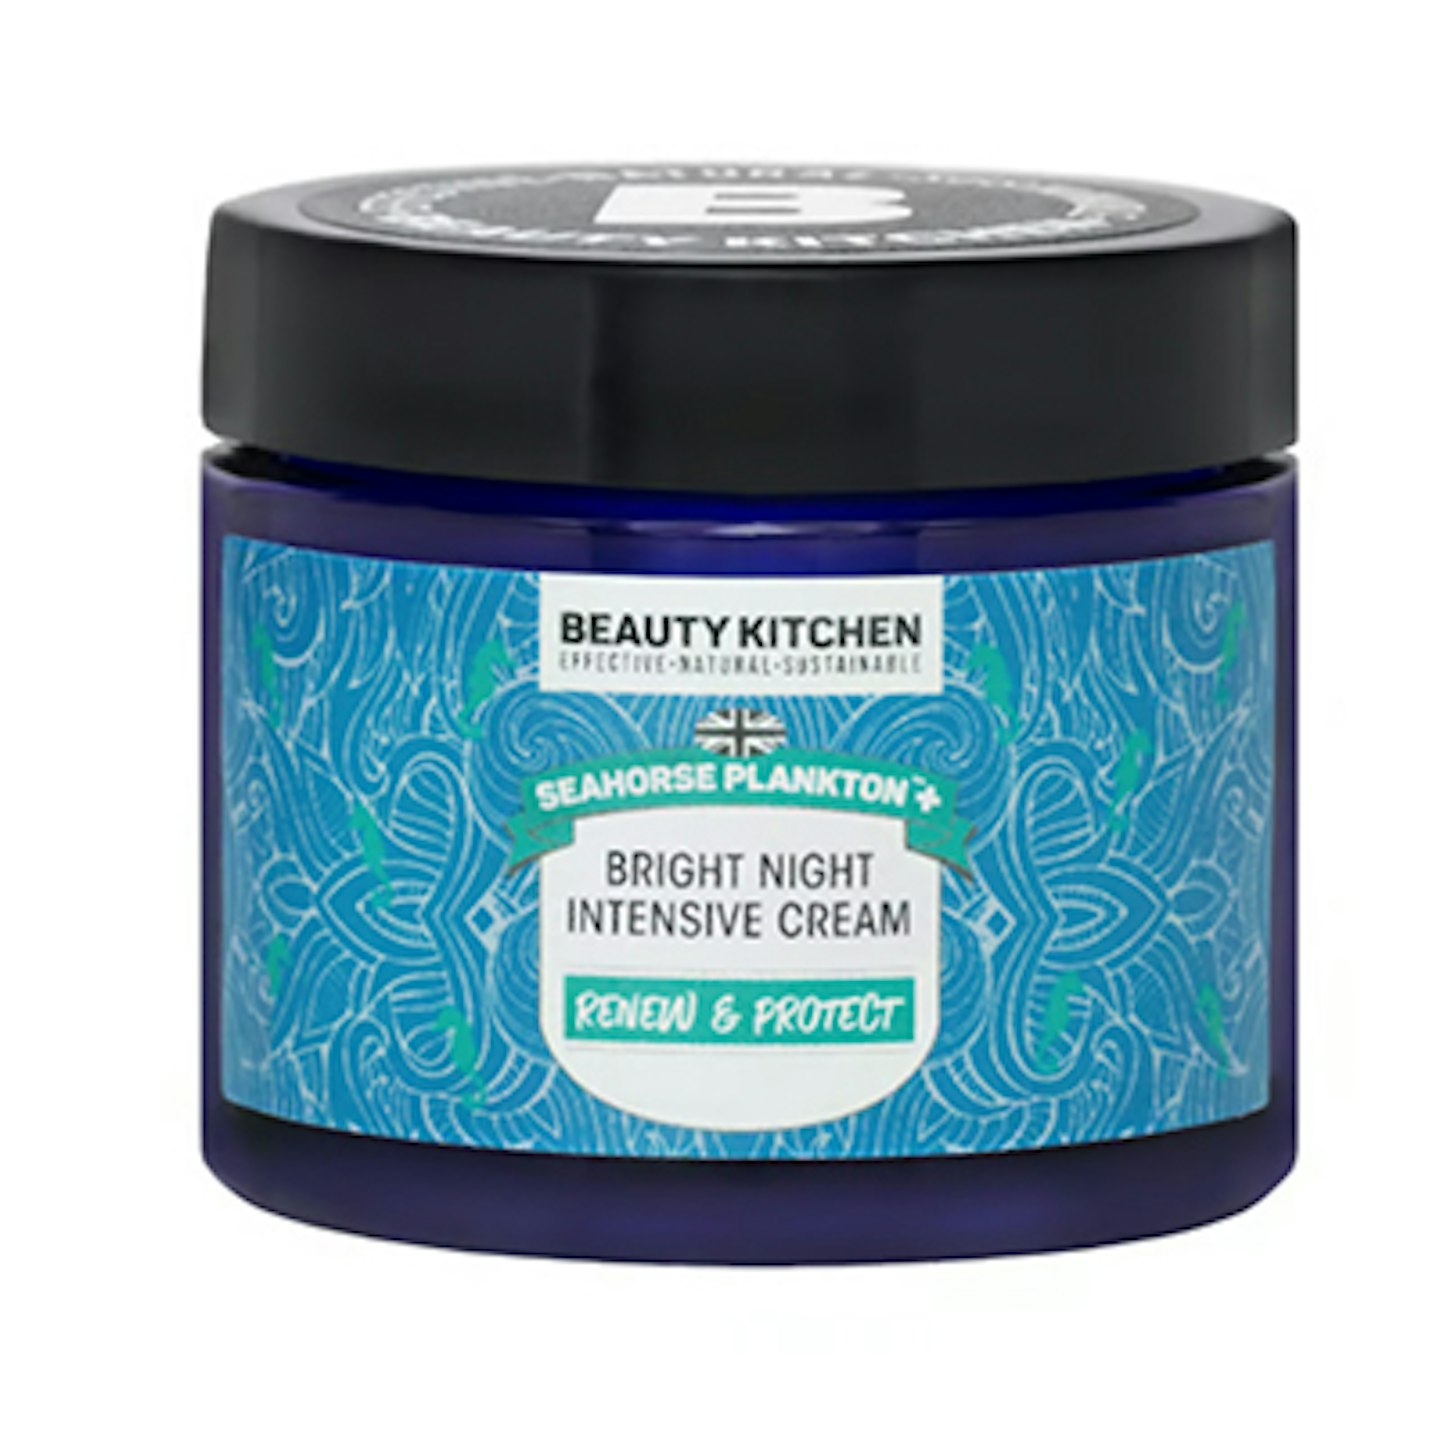 Beauty Kitchen Seahorse Plankton+ Bright Night Intensive Cream